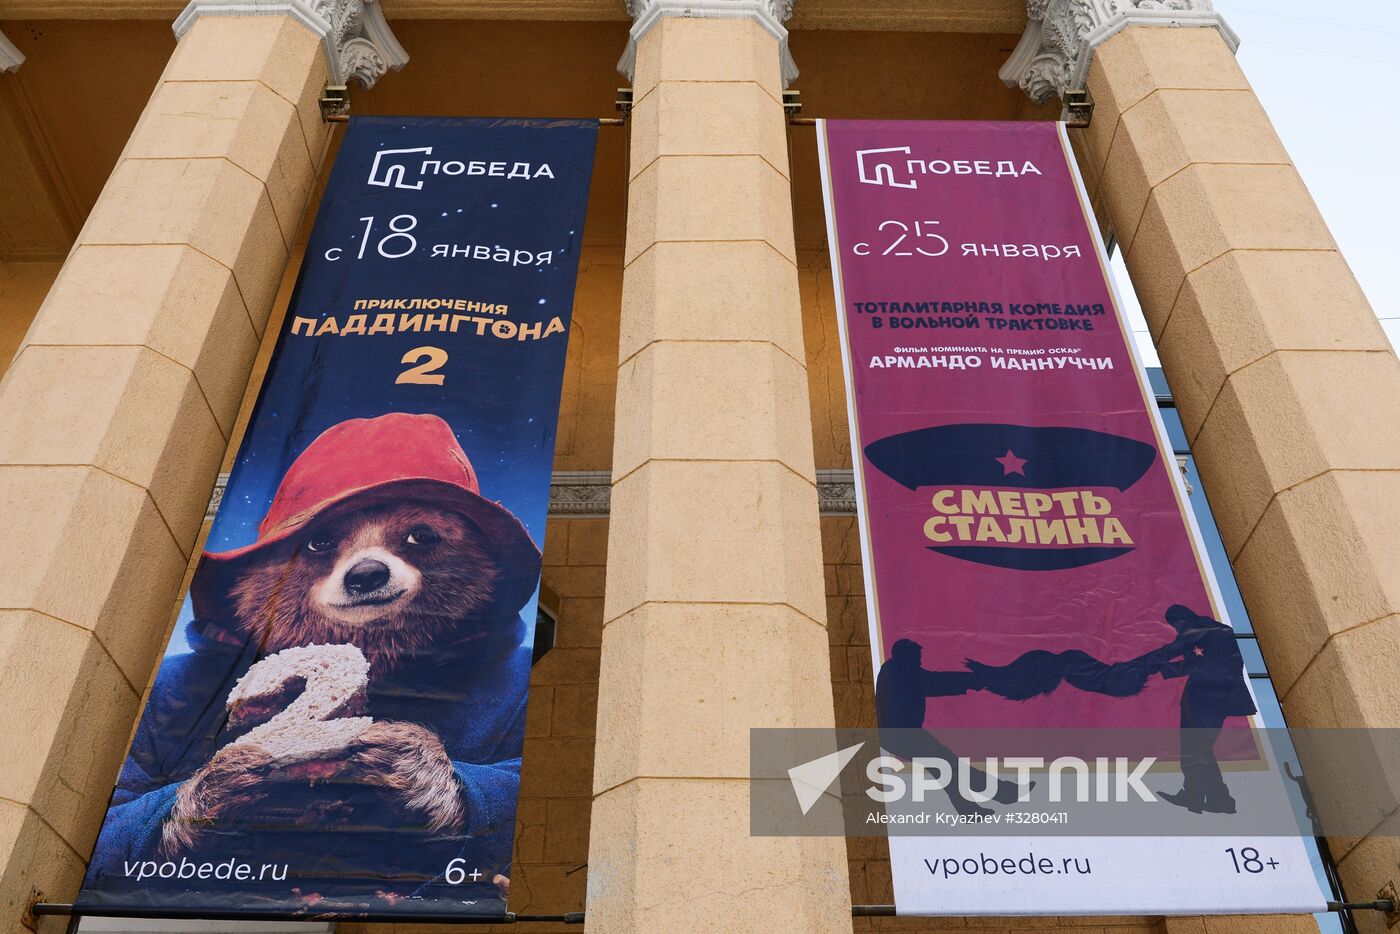 Film posters in Novosibirsk